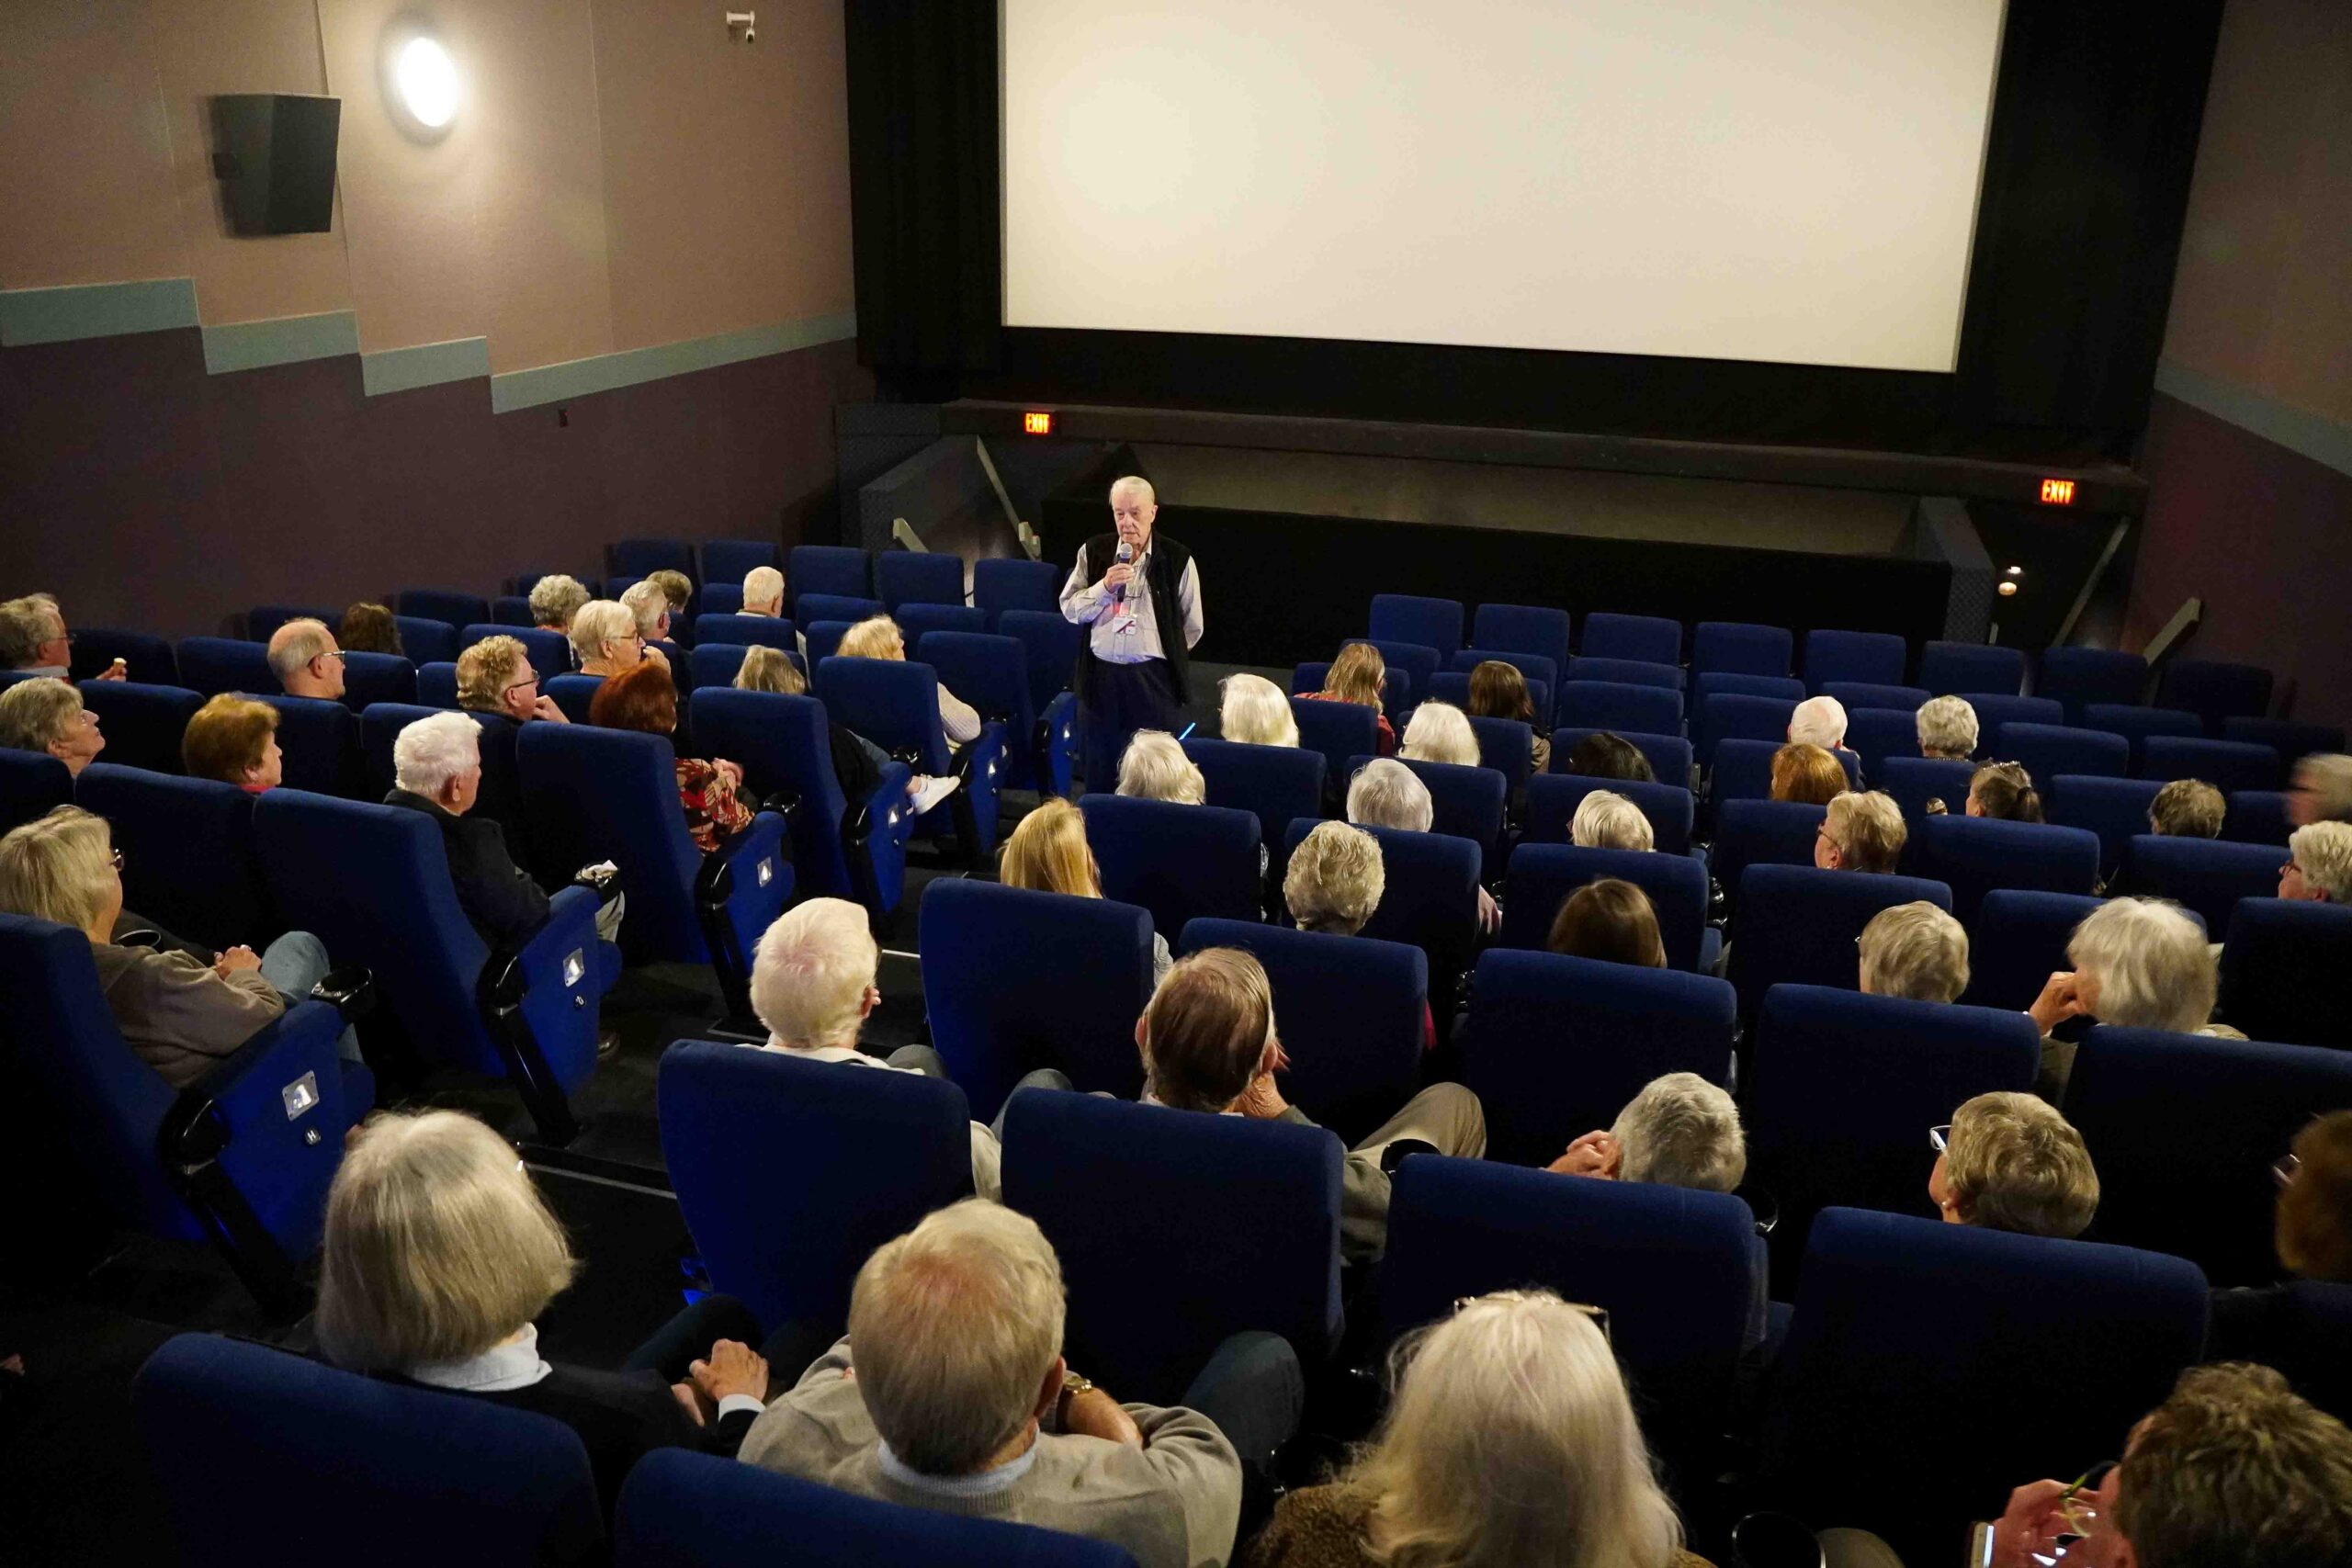 Members of Croydon Film Society inside Boronia cinema